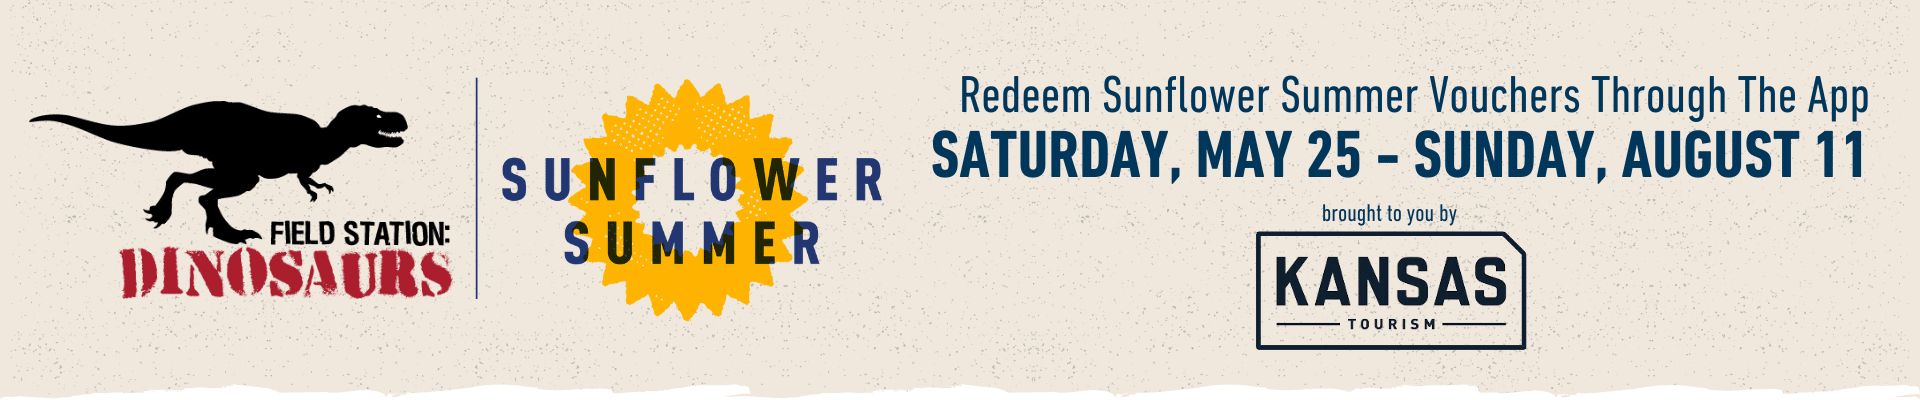 Sunflower Summer SATURDAY, MAY 25 - SUNDAY, AUGUST 11<br />
Redeem Sunflower Summer Vouchers Through The App